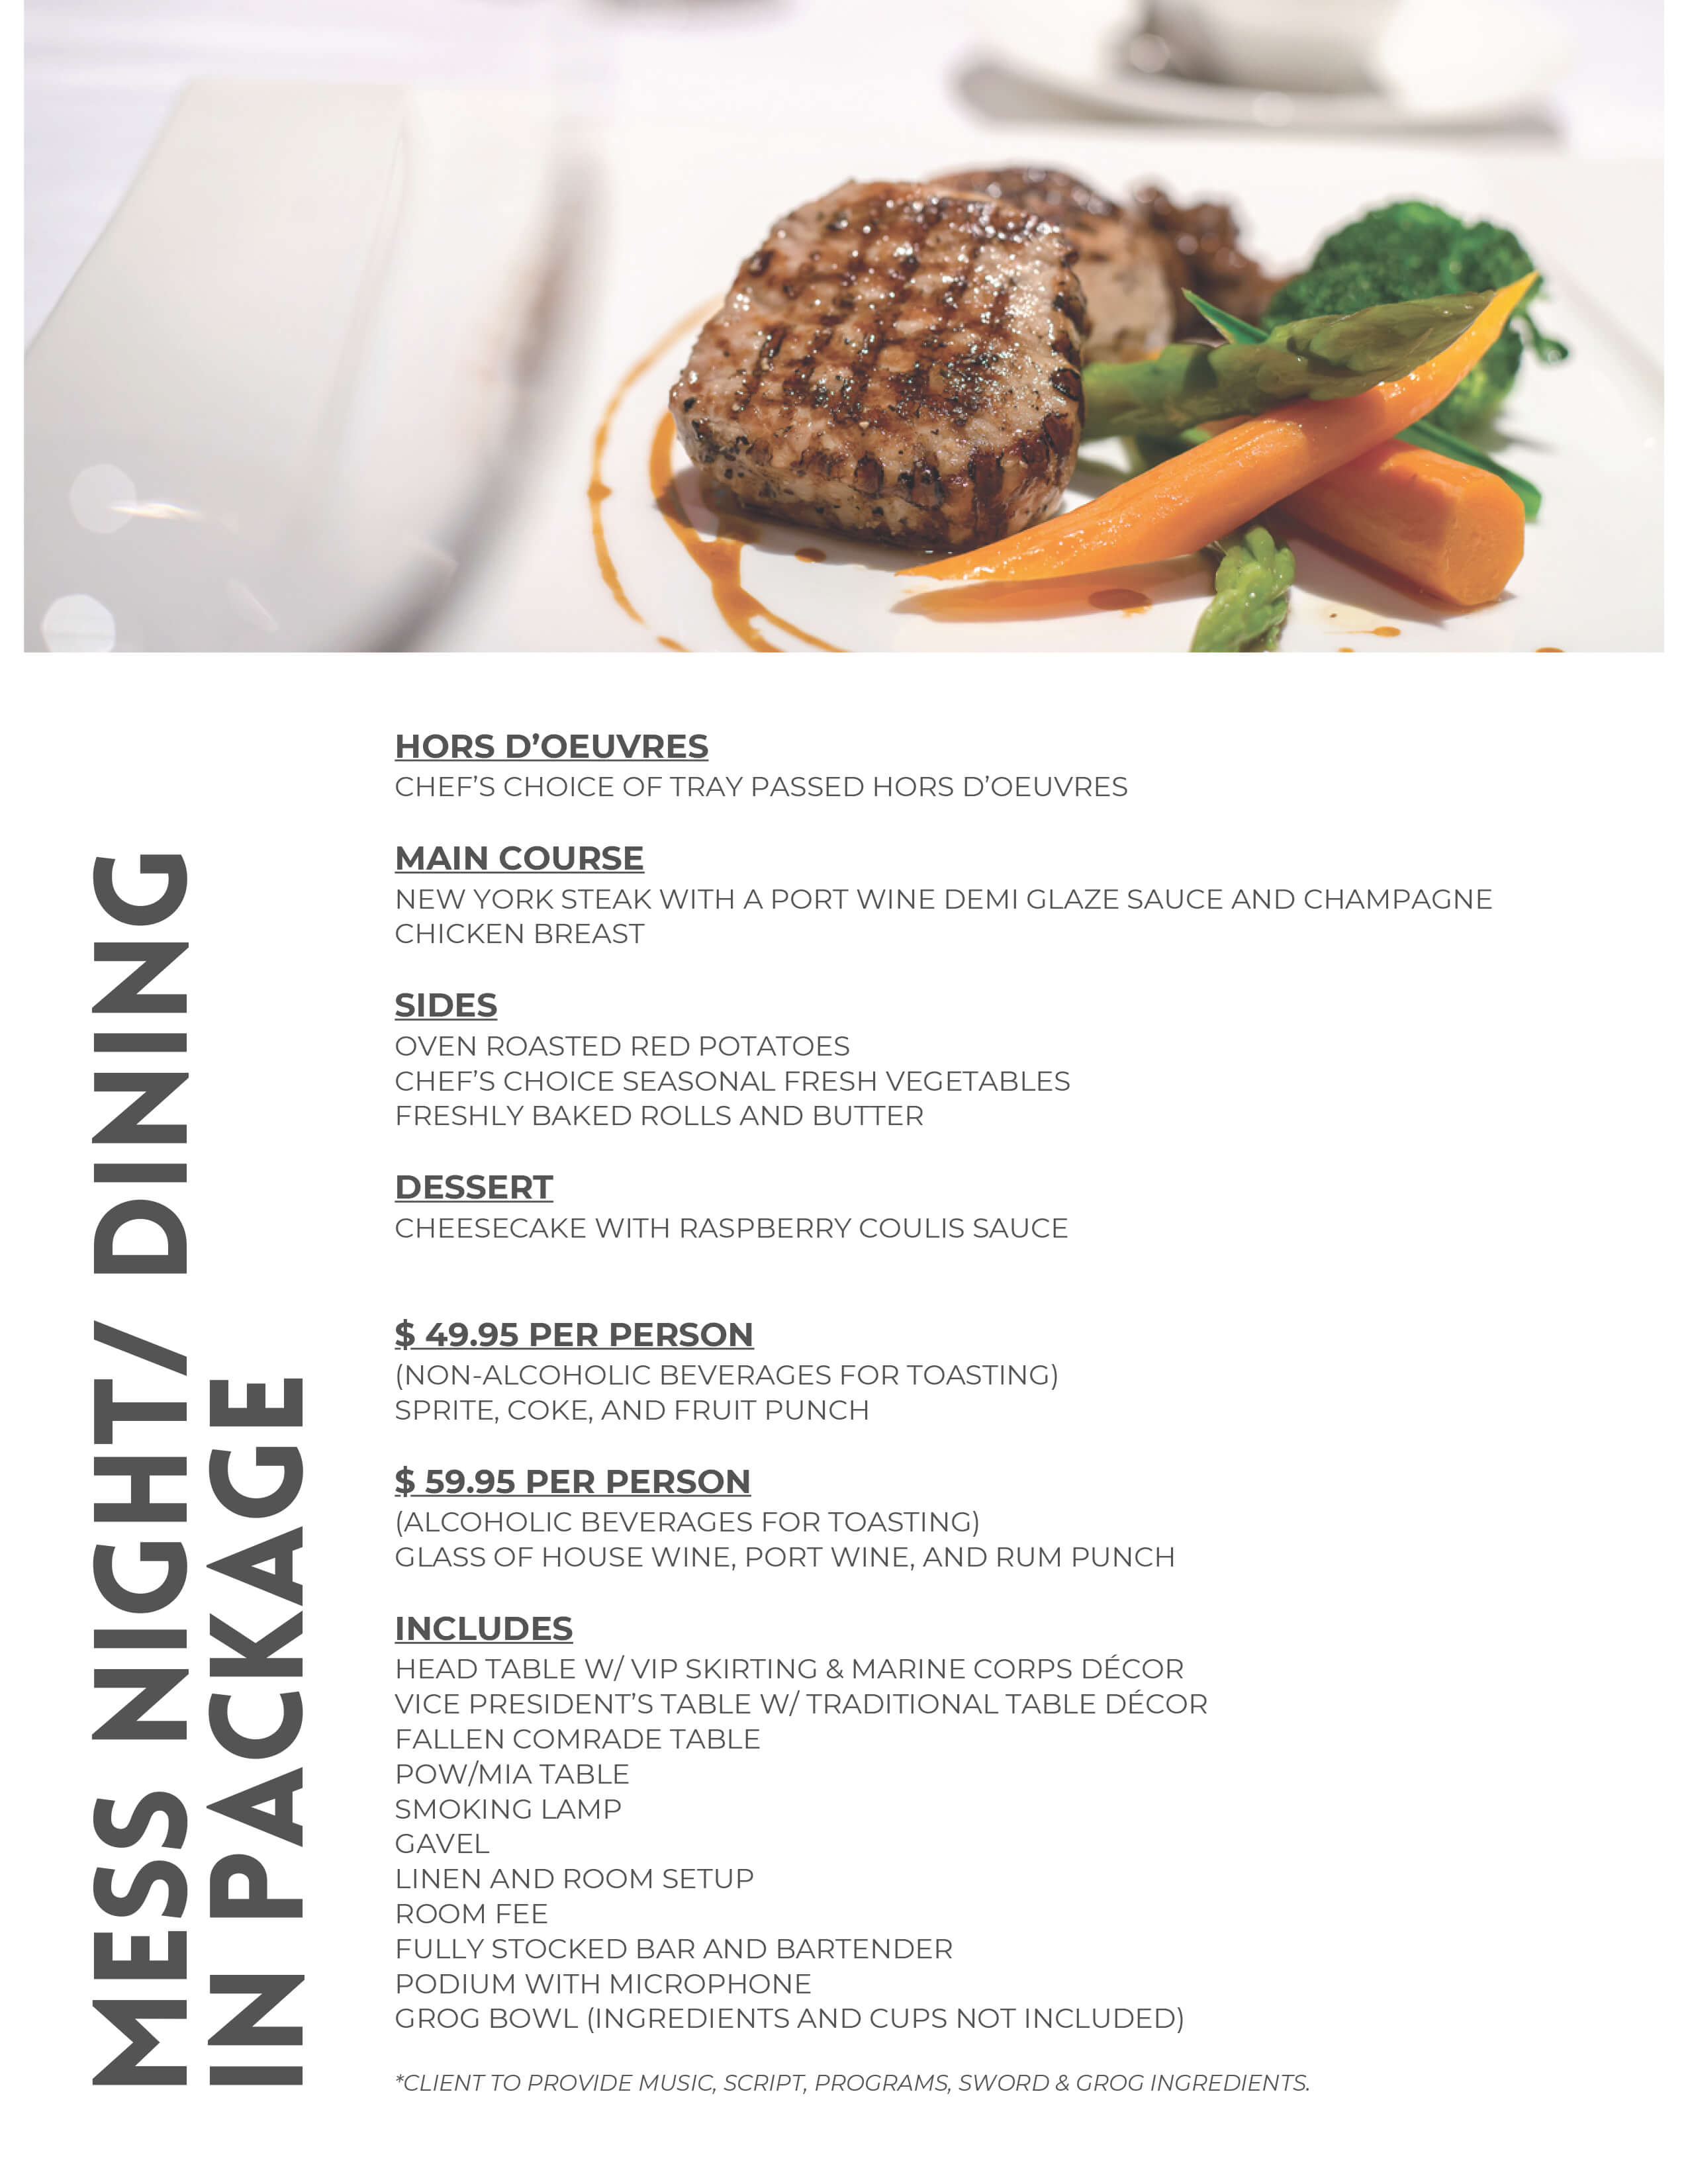 FLHS_the-club_catering-menu-9.jpg